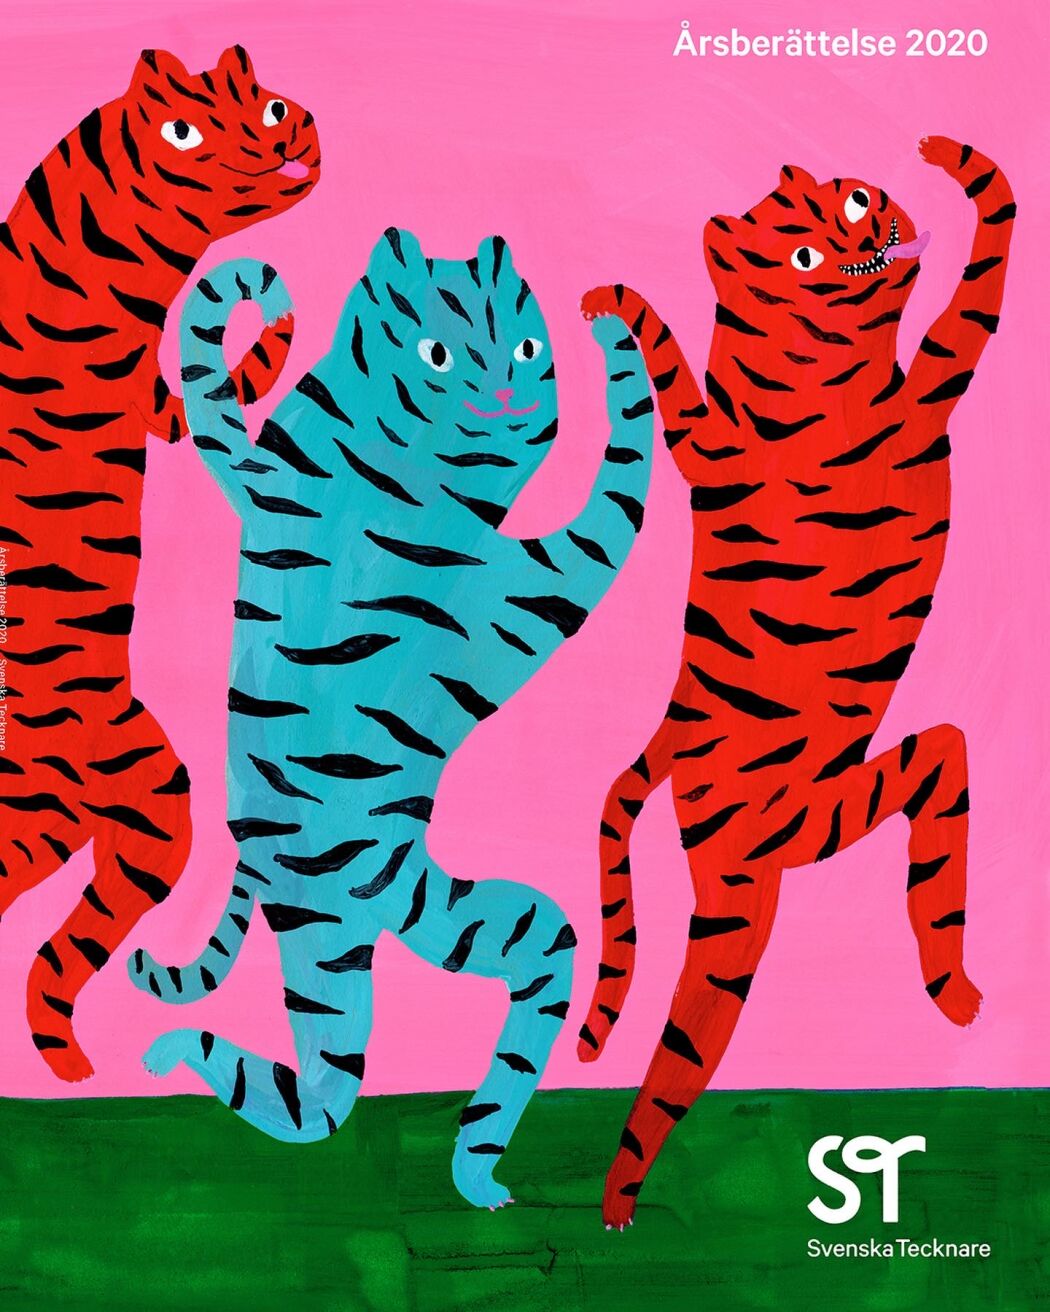 Tigers illustrated and animated for Svenska Tecknare by Yoyo Nasty